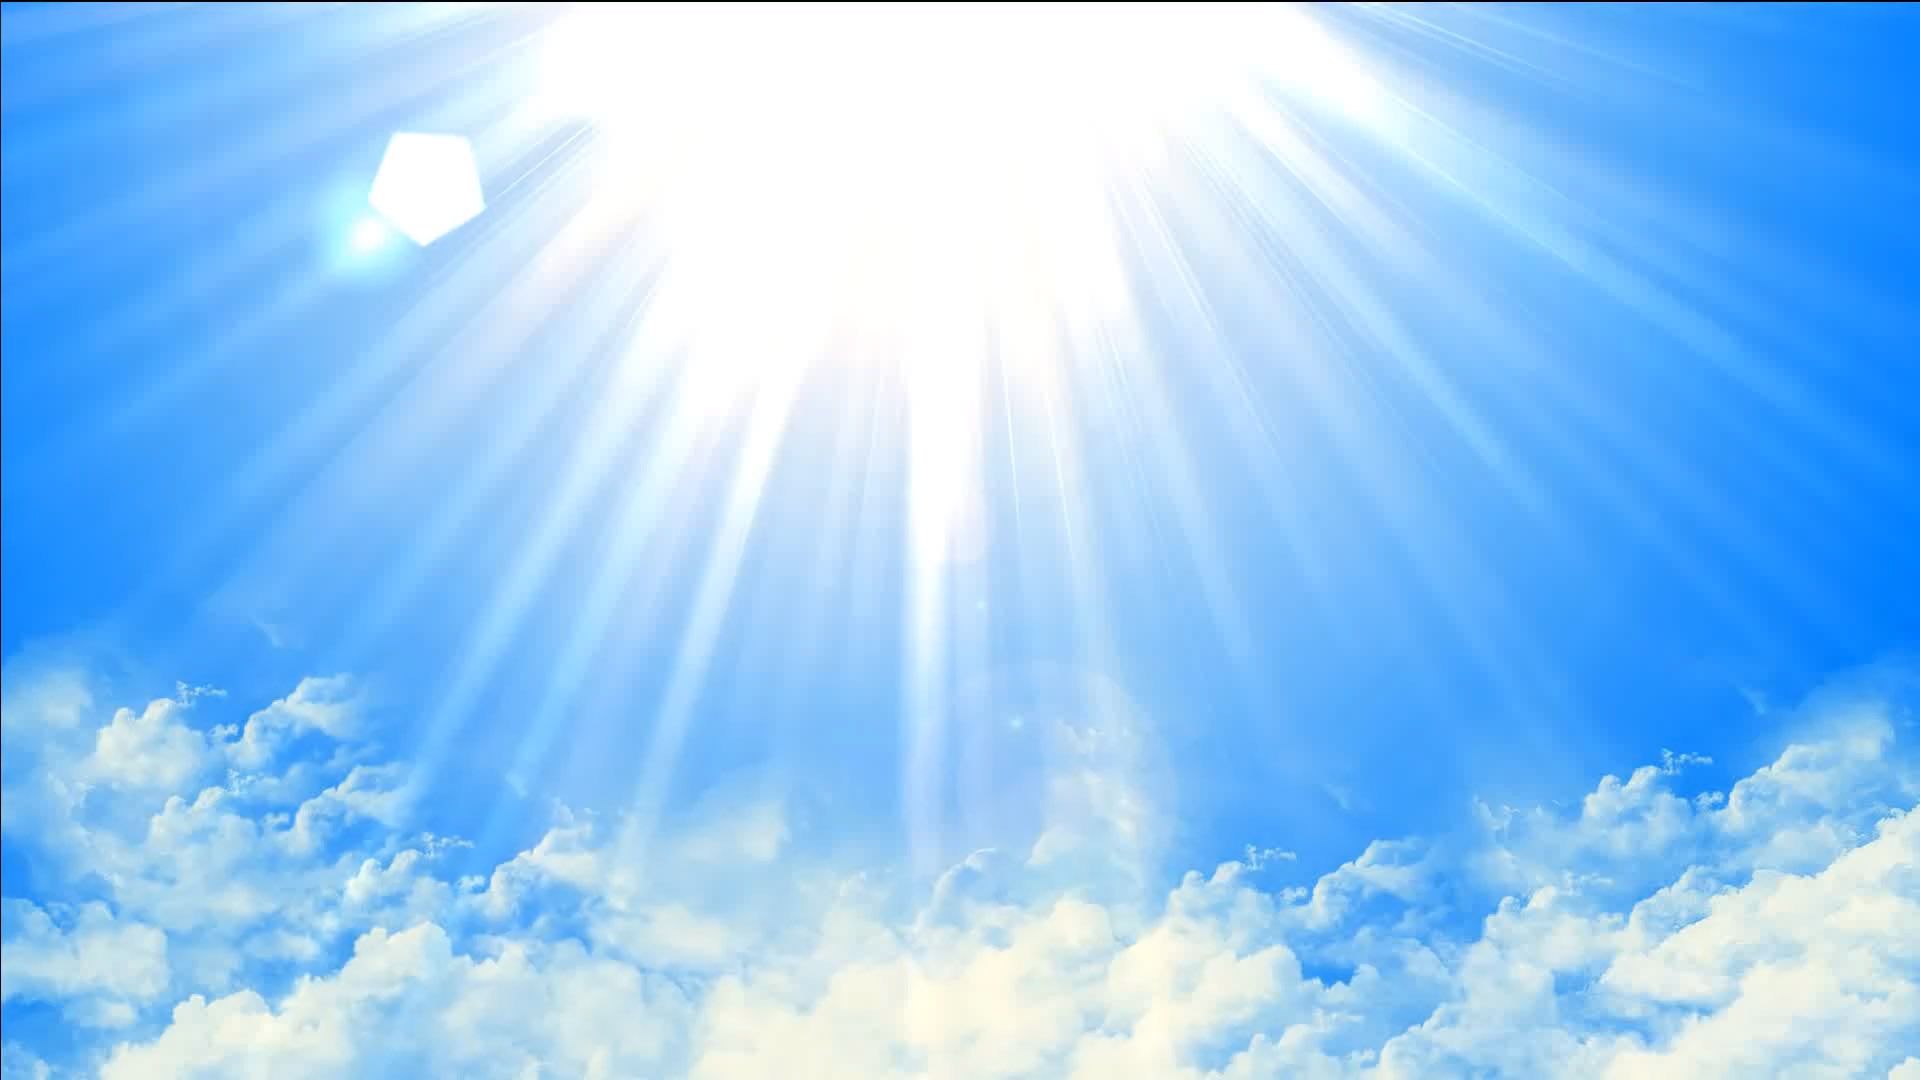 Animated Sun Shining lights on blue sky. Blue sky